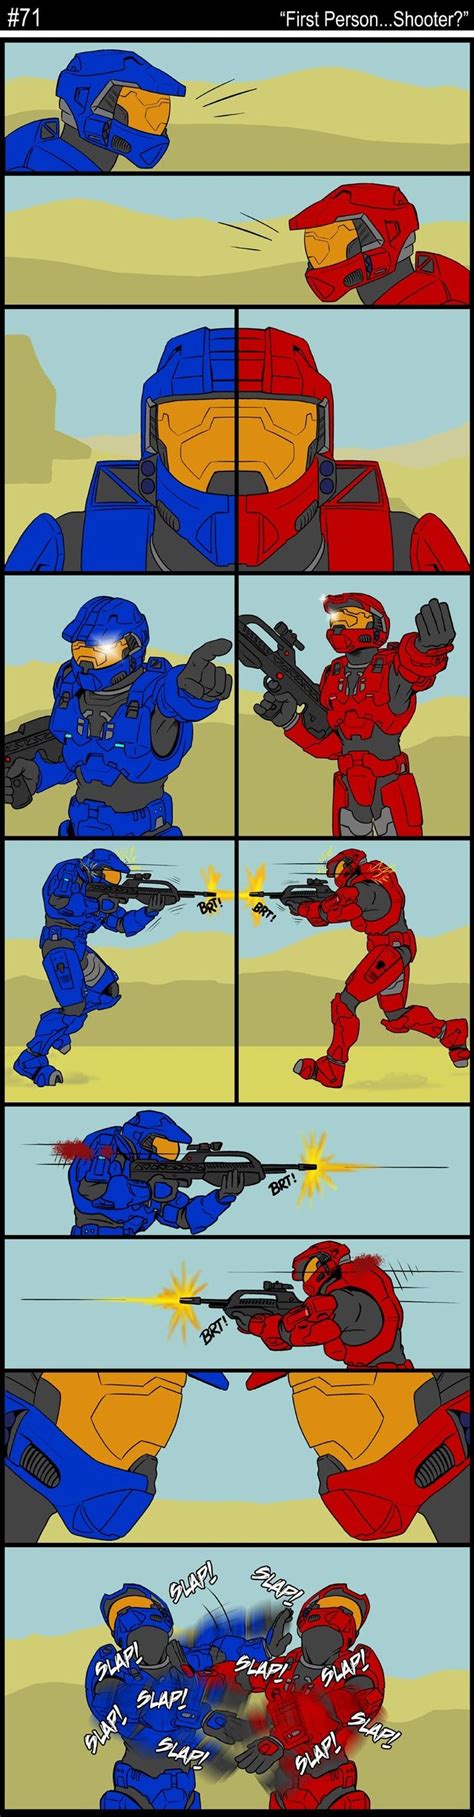 Red Vs Blue E 0 Funny Gaming Memes Gamer Humor Video Games Funny